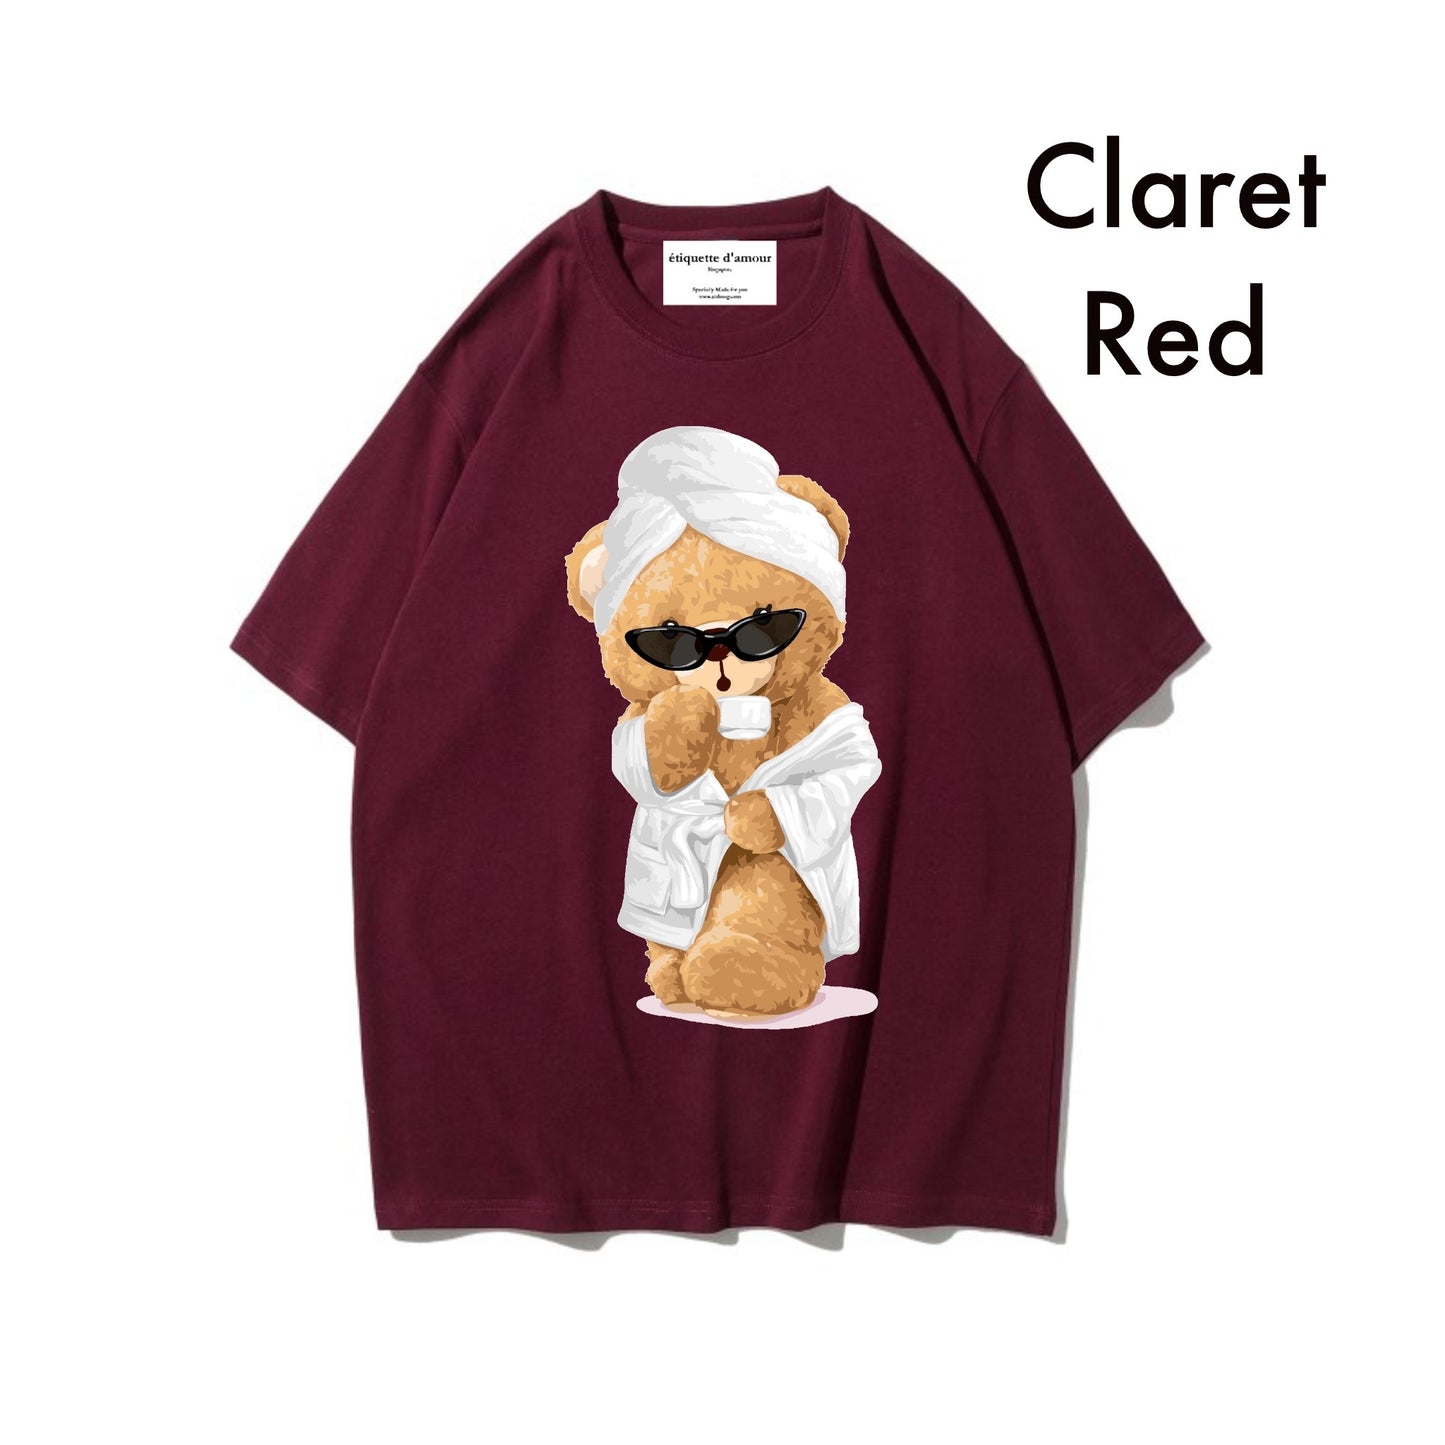 Etiquette Oversized T-Shirt - [0026] Bath Robe Bear